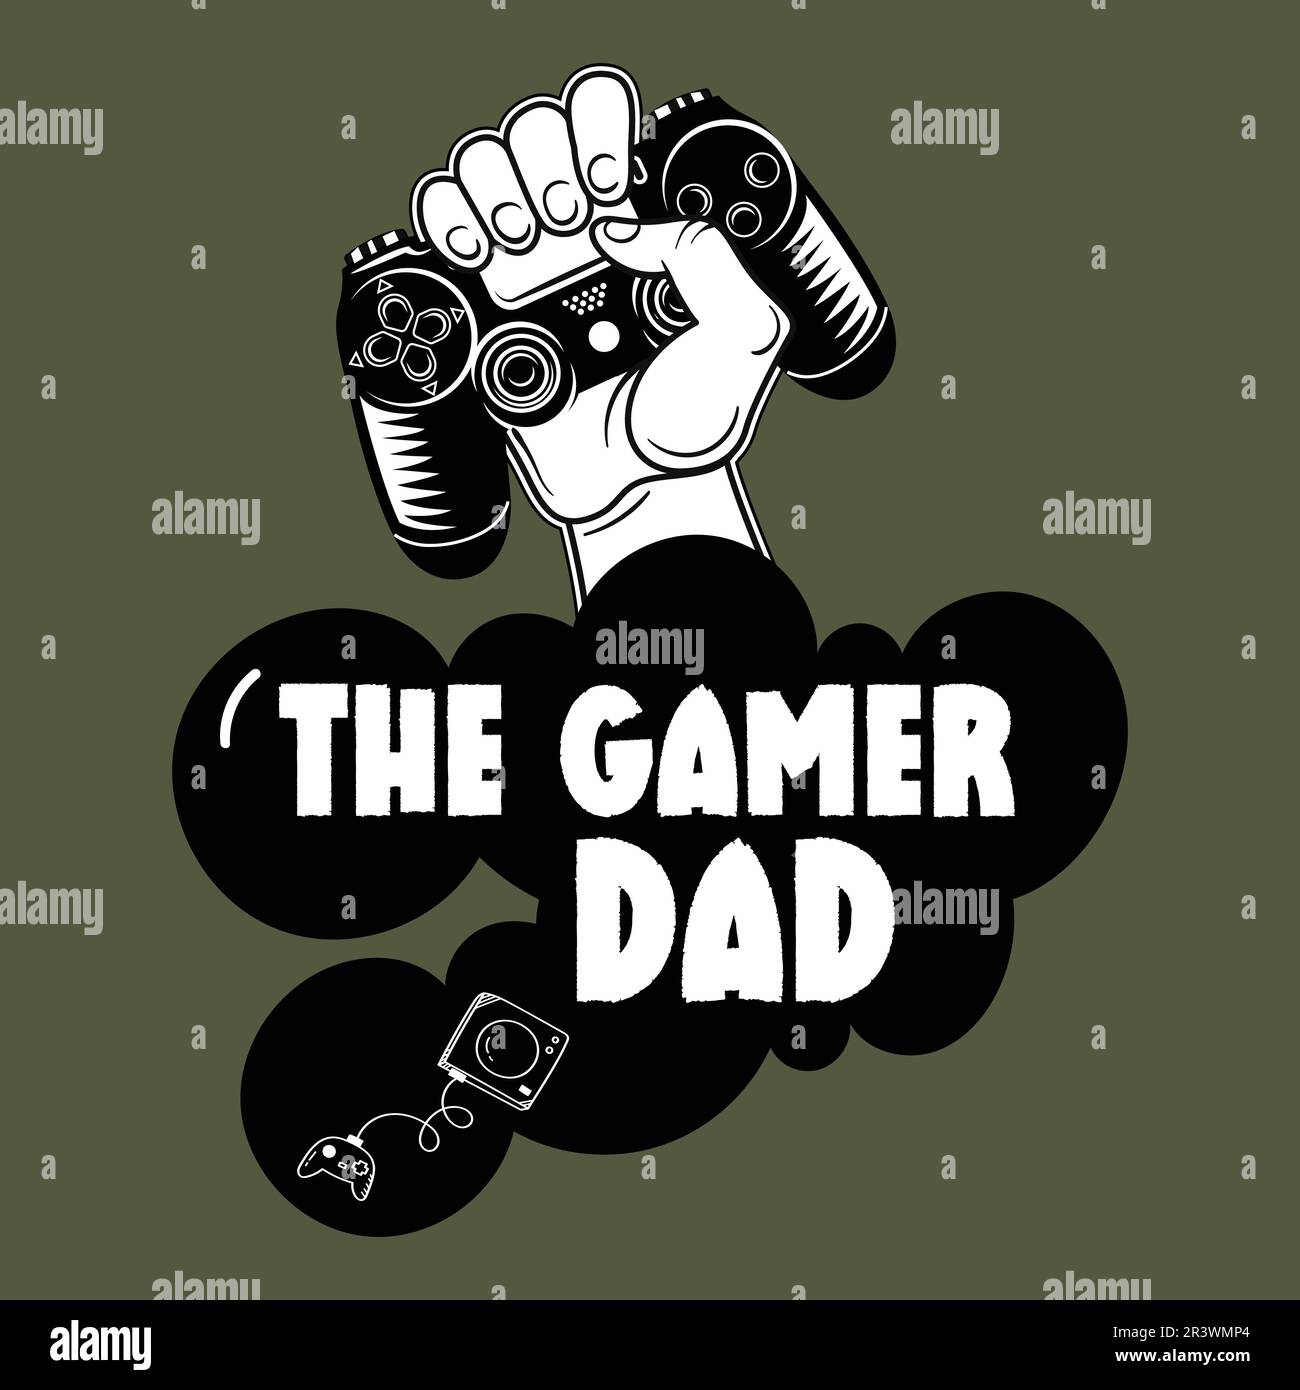 The Gamer dad t shirt design Stock Vector